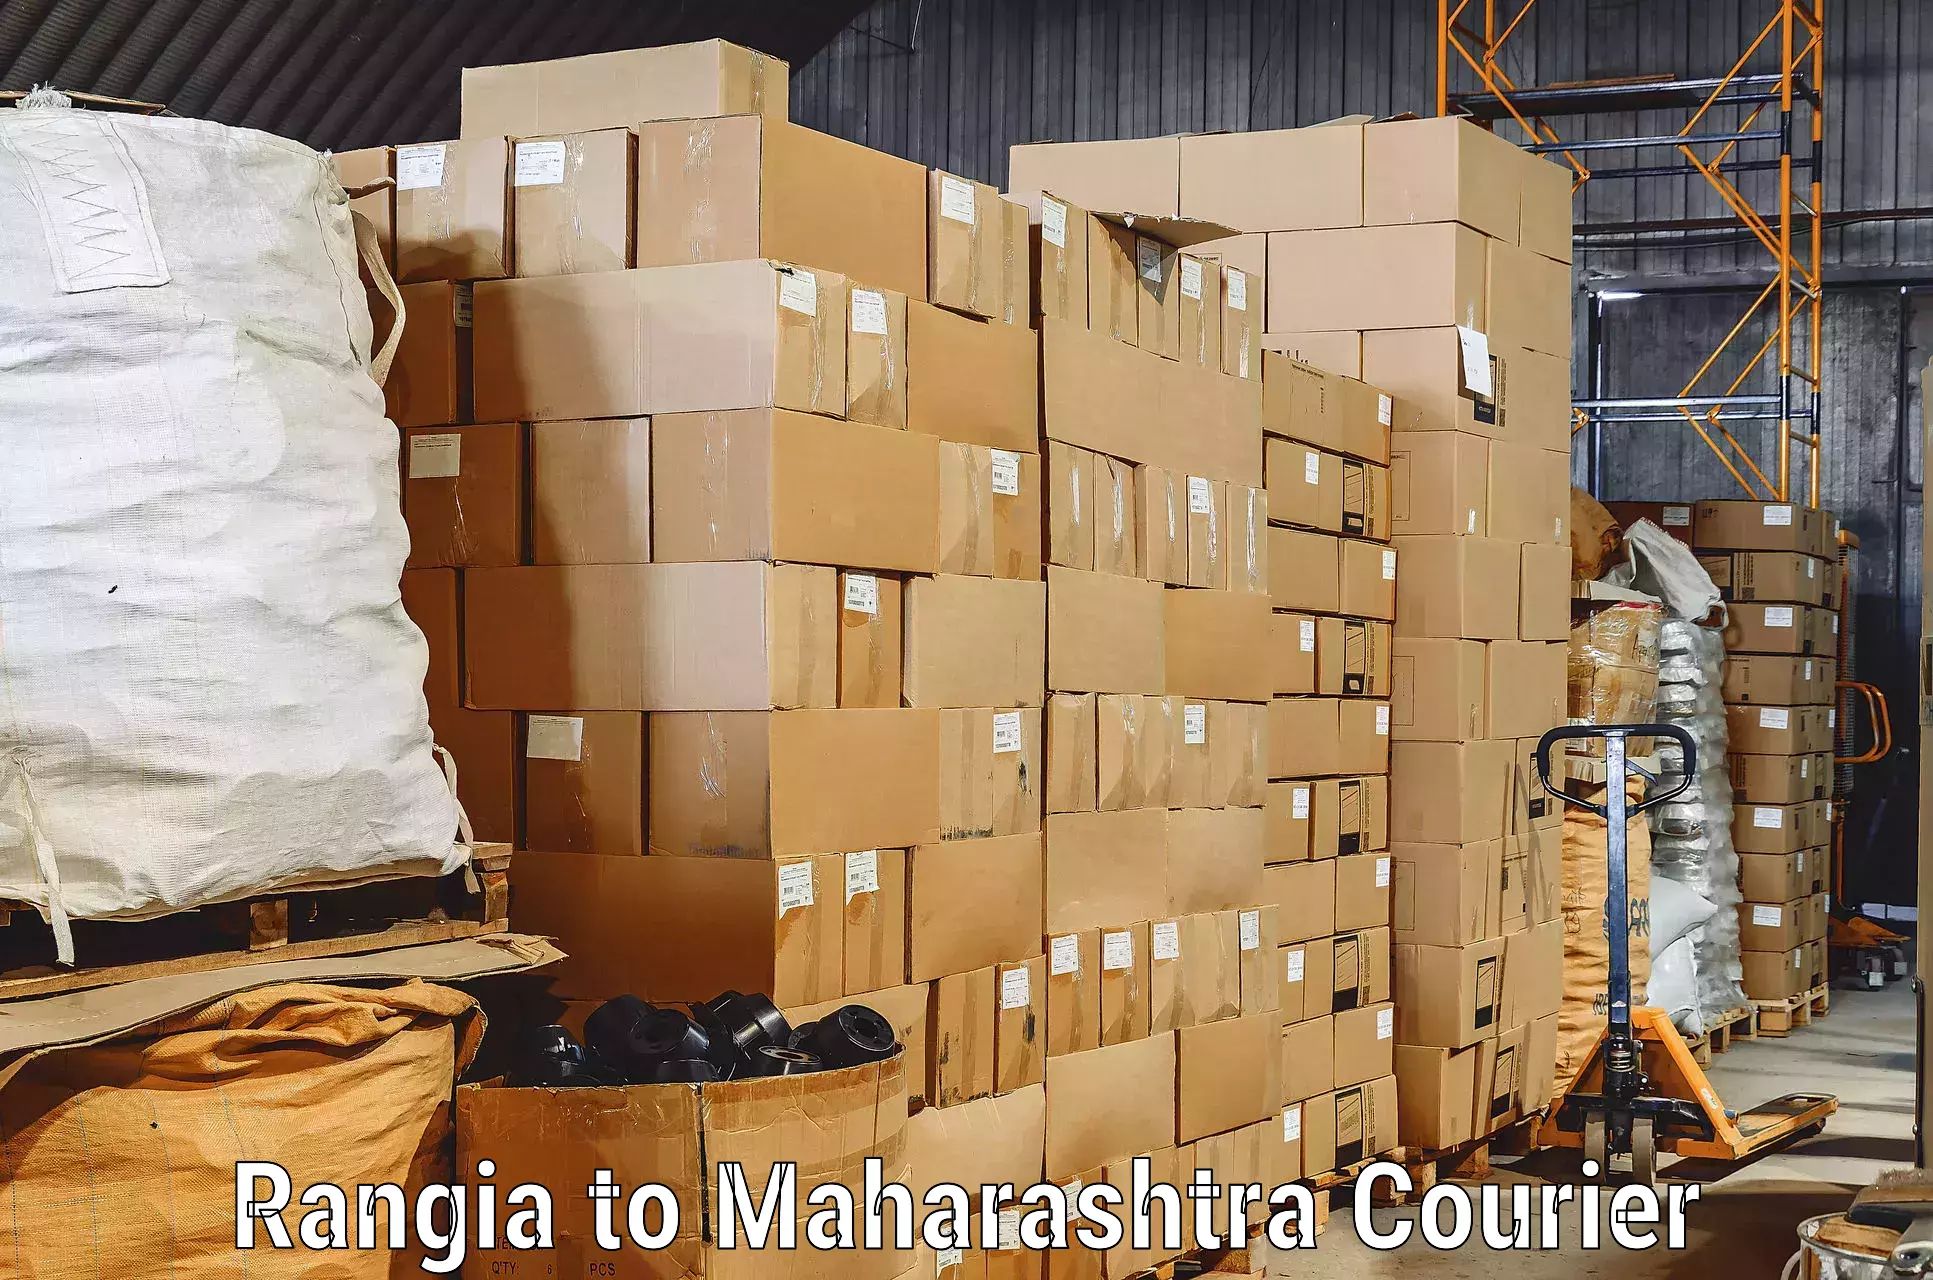 Professional movers and packers Rangia to Maharashtra